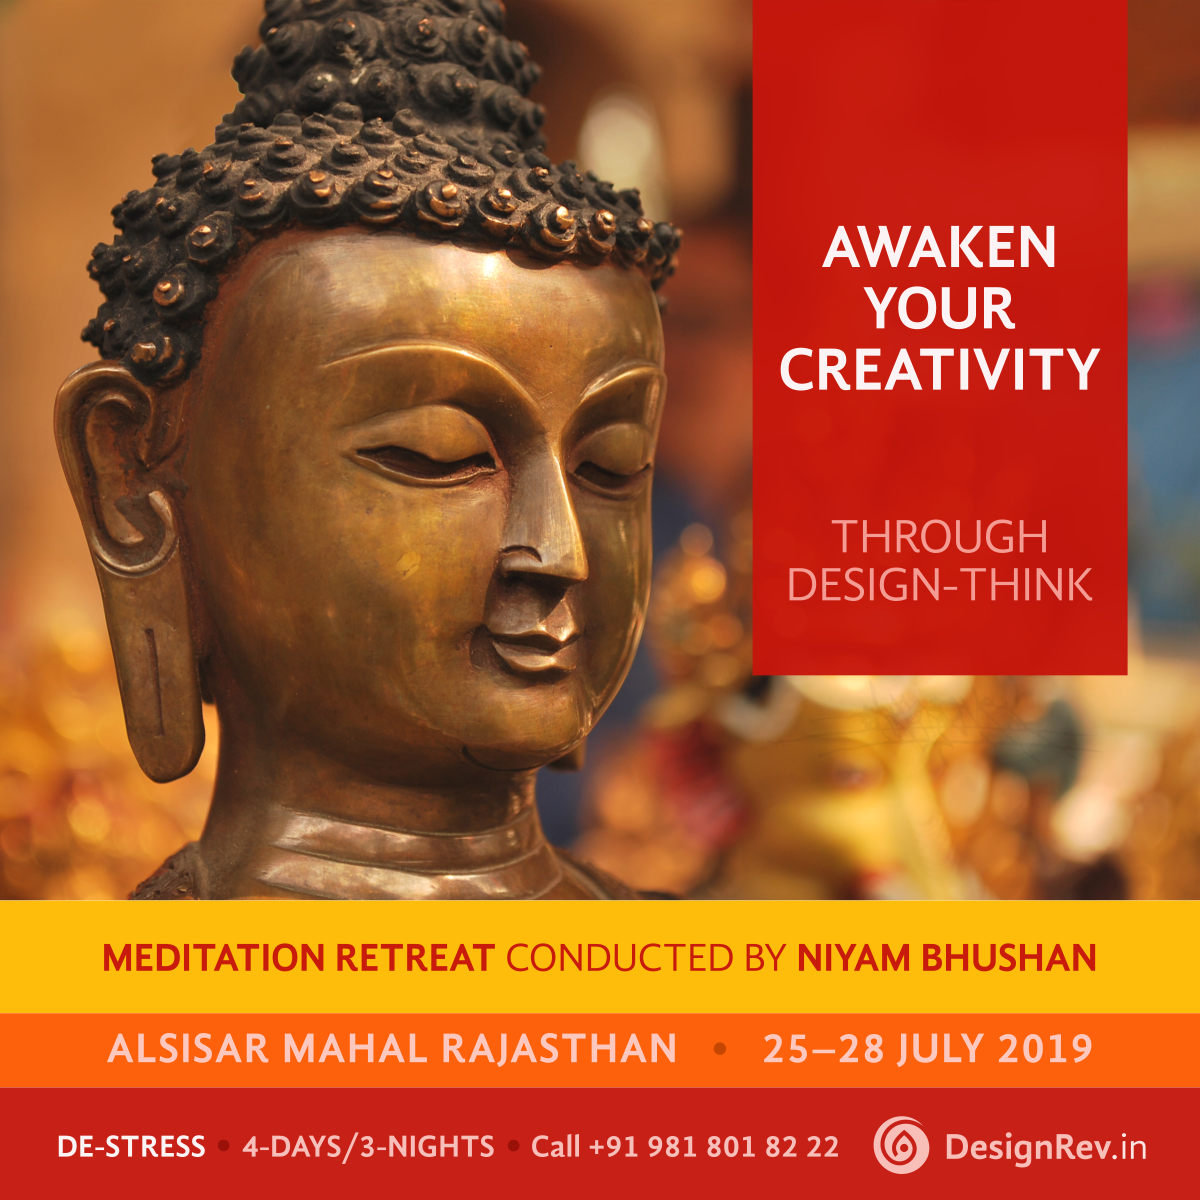 Awaken Your Creativity Through Design-Think. 4Days/3Nights Meditation Retreat at Alsisar Mahal Palace Rajasthan, 25-28 July 2019. Conducted by Niyam Bhushan